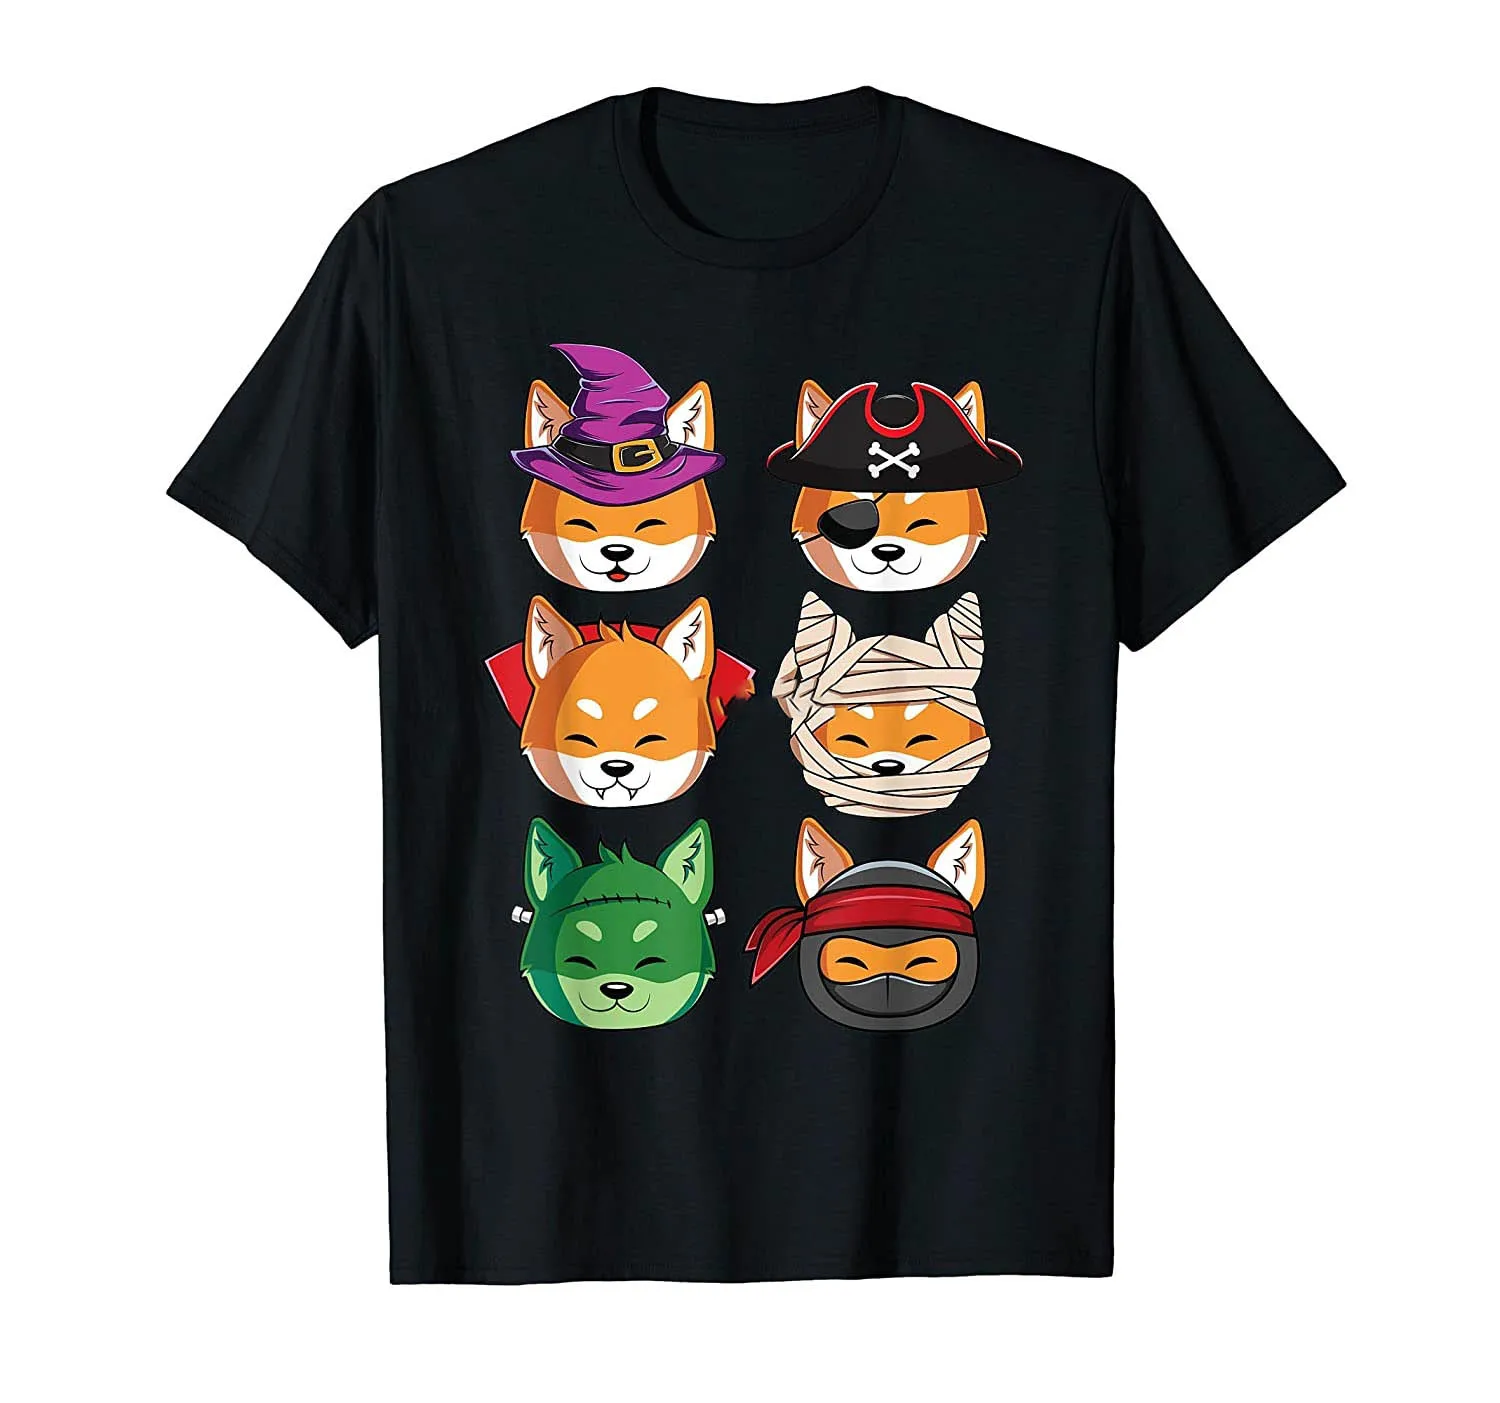 Funny Hallwoeen Shiba Inu Dog - Dogs Lover Costume Gift T-Shirt Men Cotton Tshirt Tees Tops Harajuku Streetwear